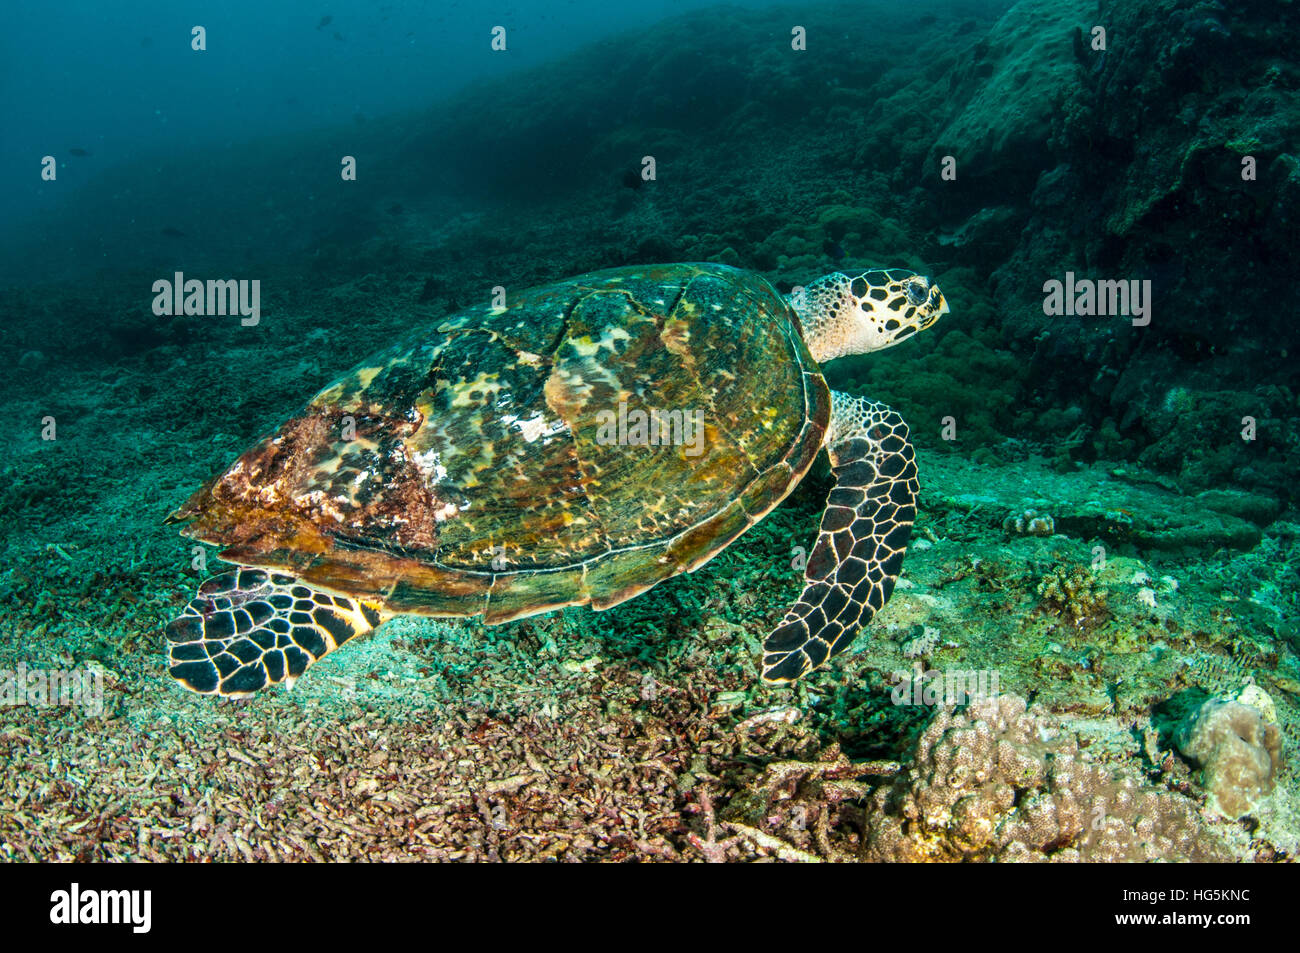 La tortuga carey del Pacífico, Bali, Indonesia Foto de stock